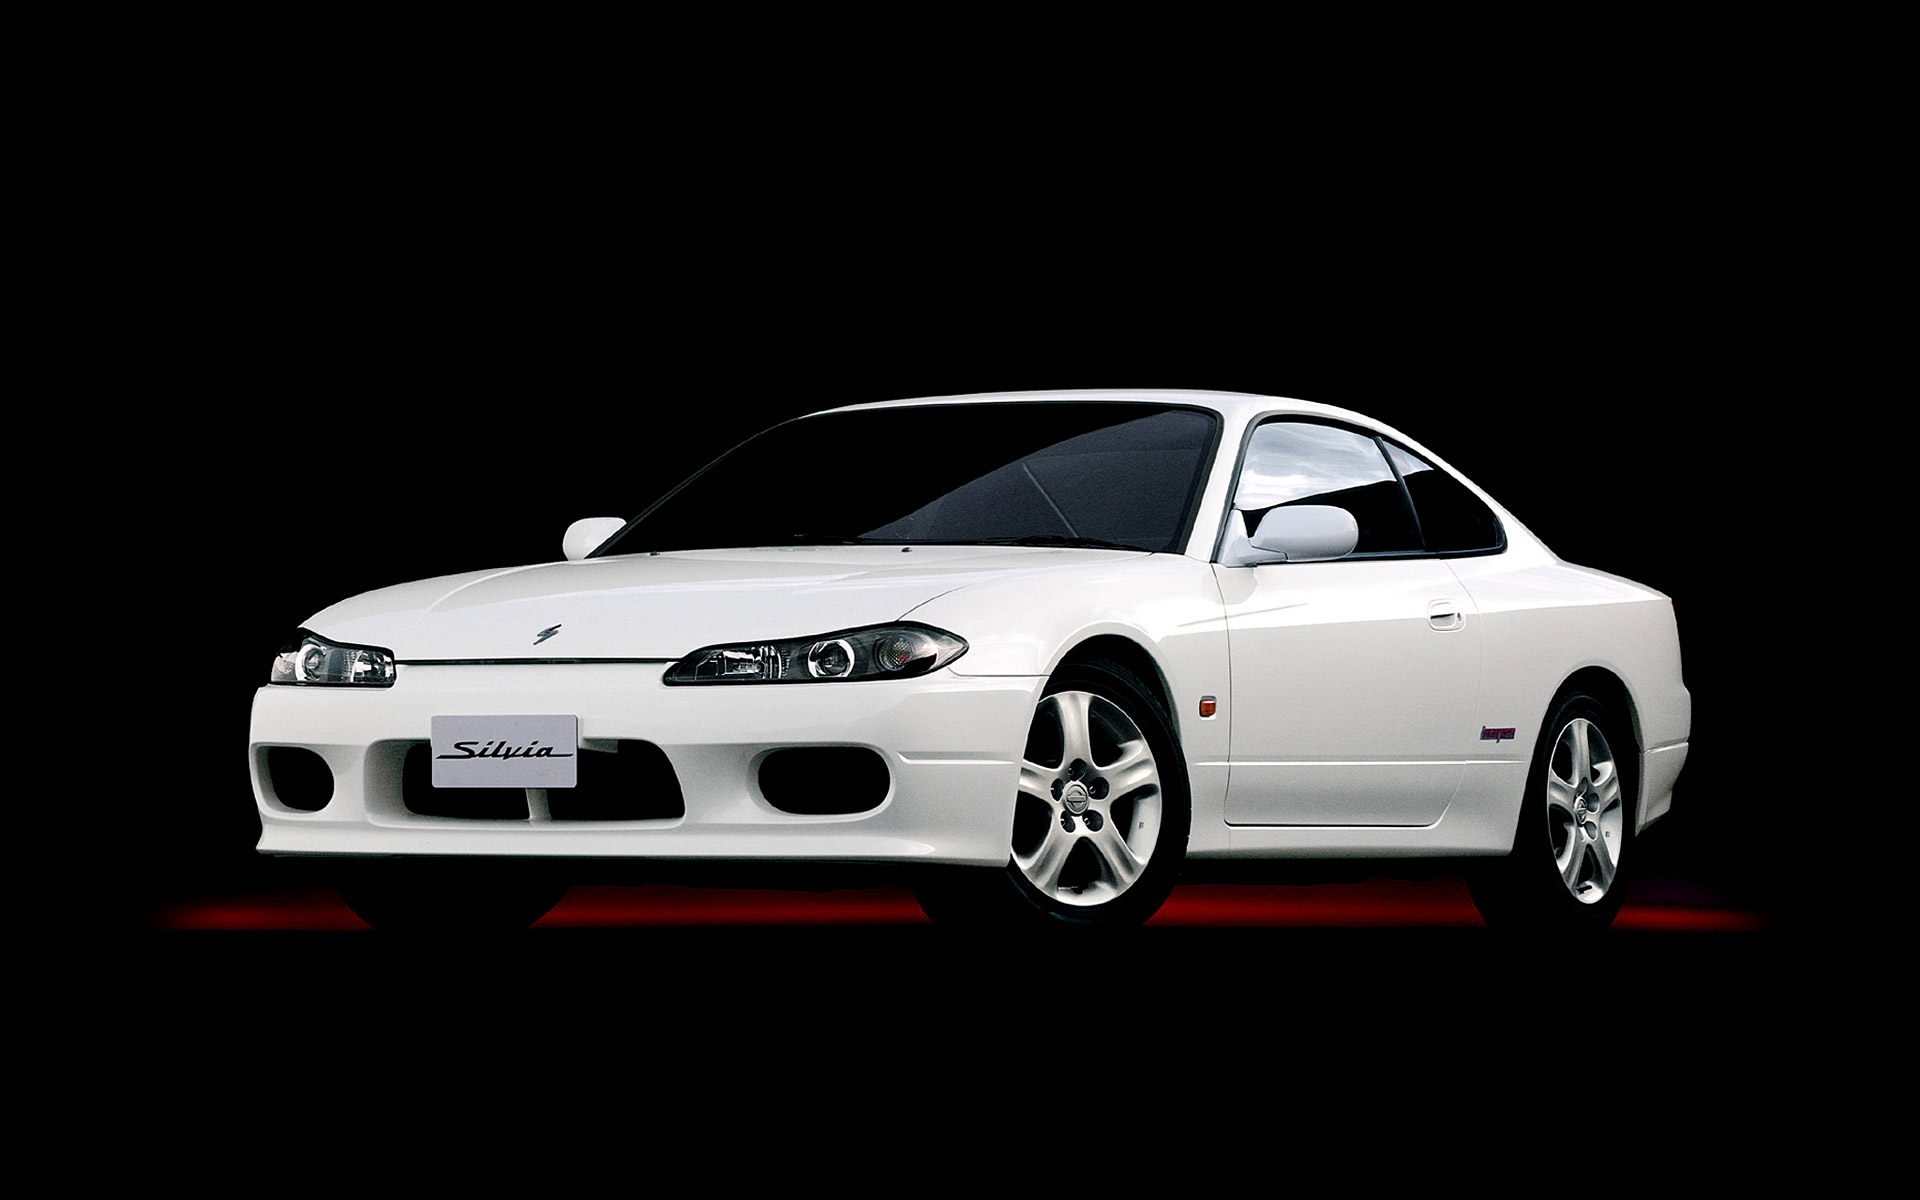  2000 Nissan Silvia Wallpaper.